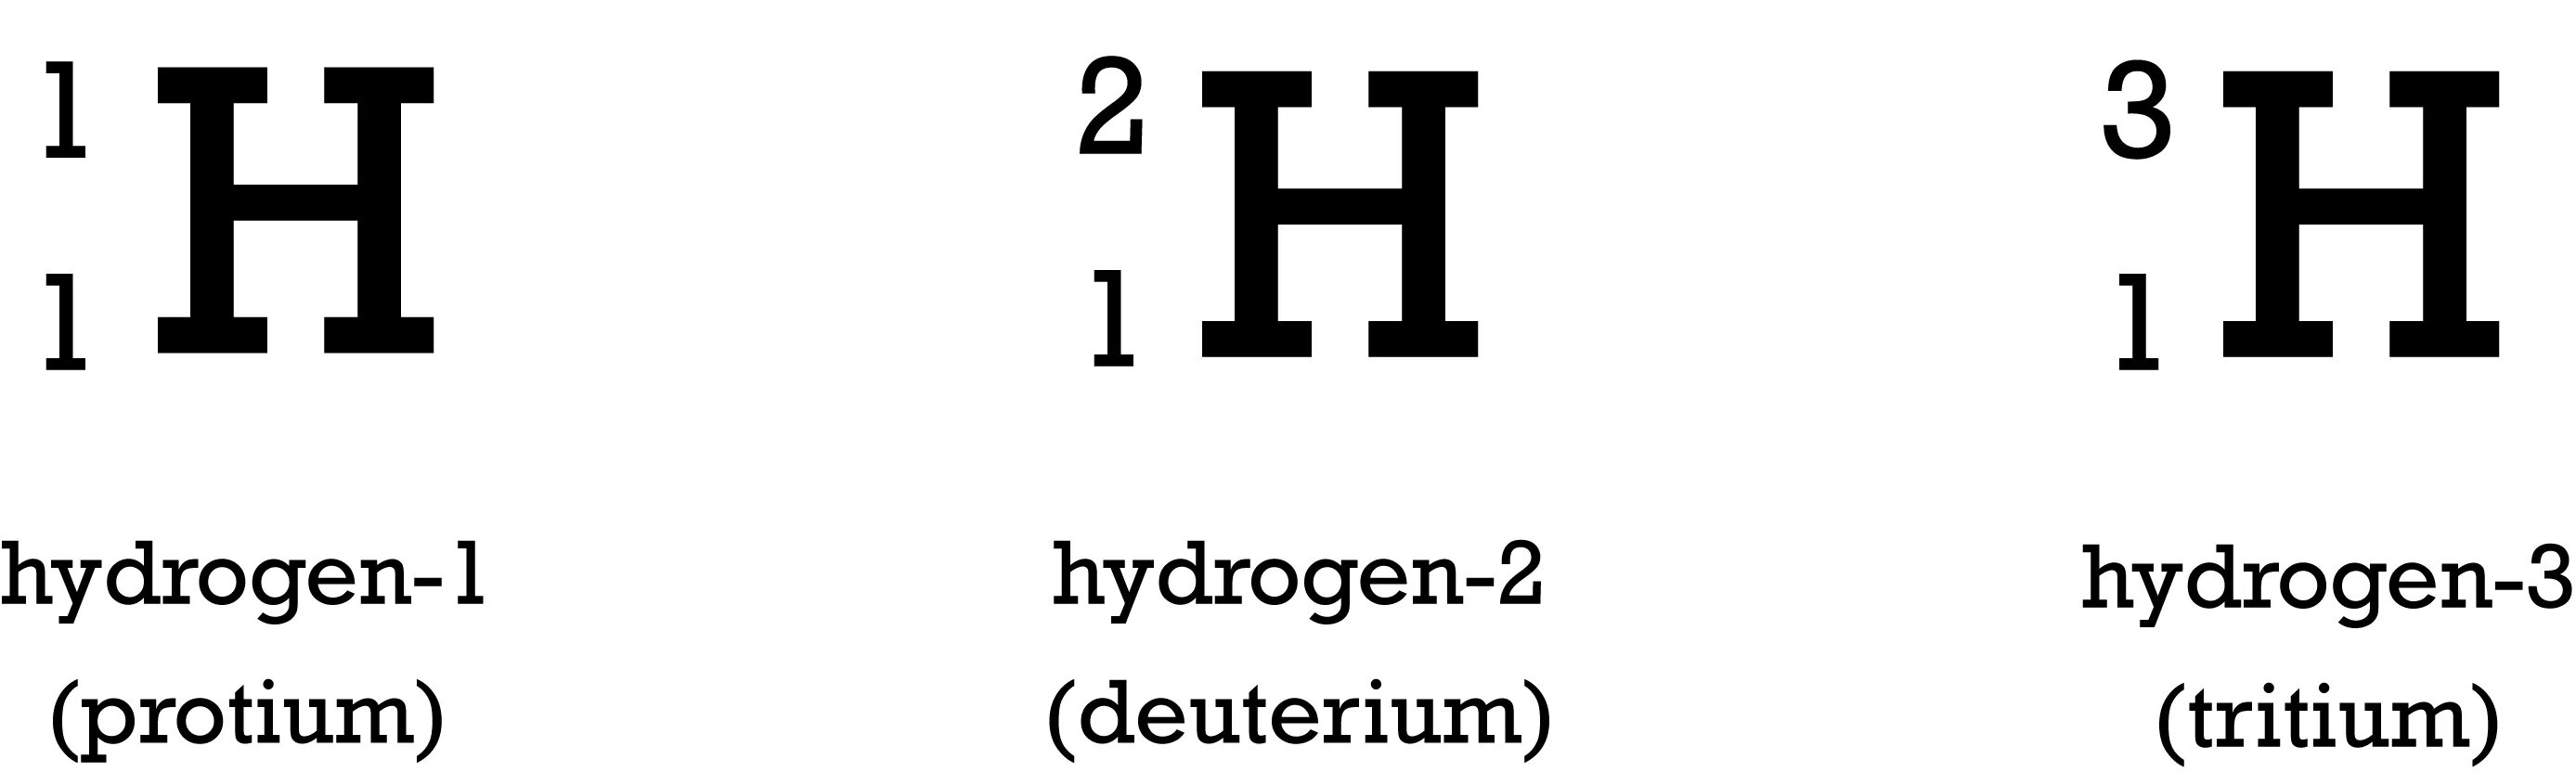 Изотоп 3 1 h. Водород дейтерий тритий. Протий дейтерий тритий таблица. Изотопы водорода. Символы изотопов водорода.